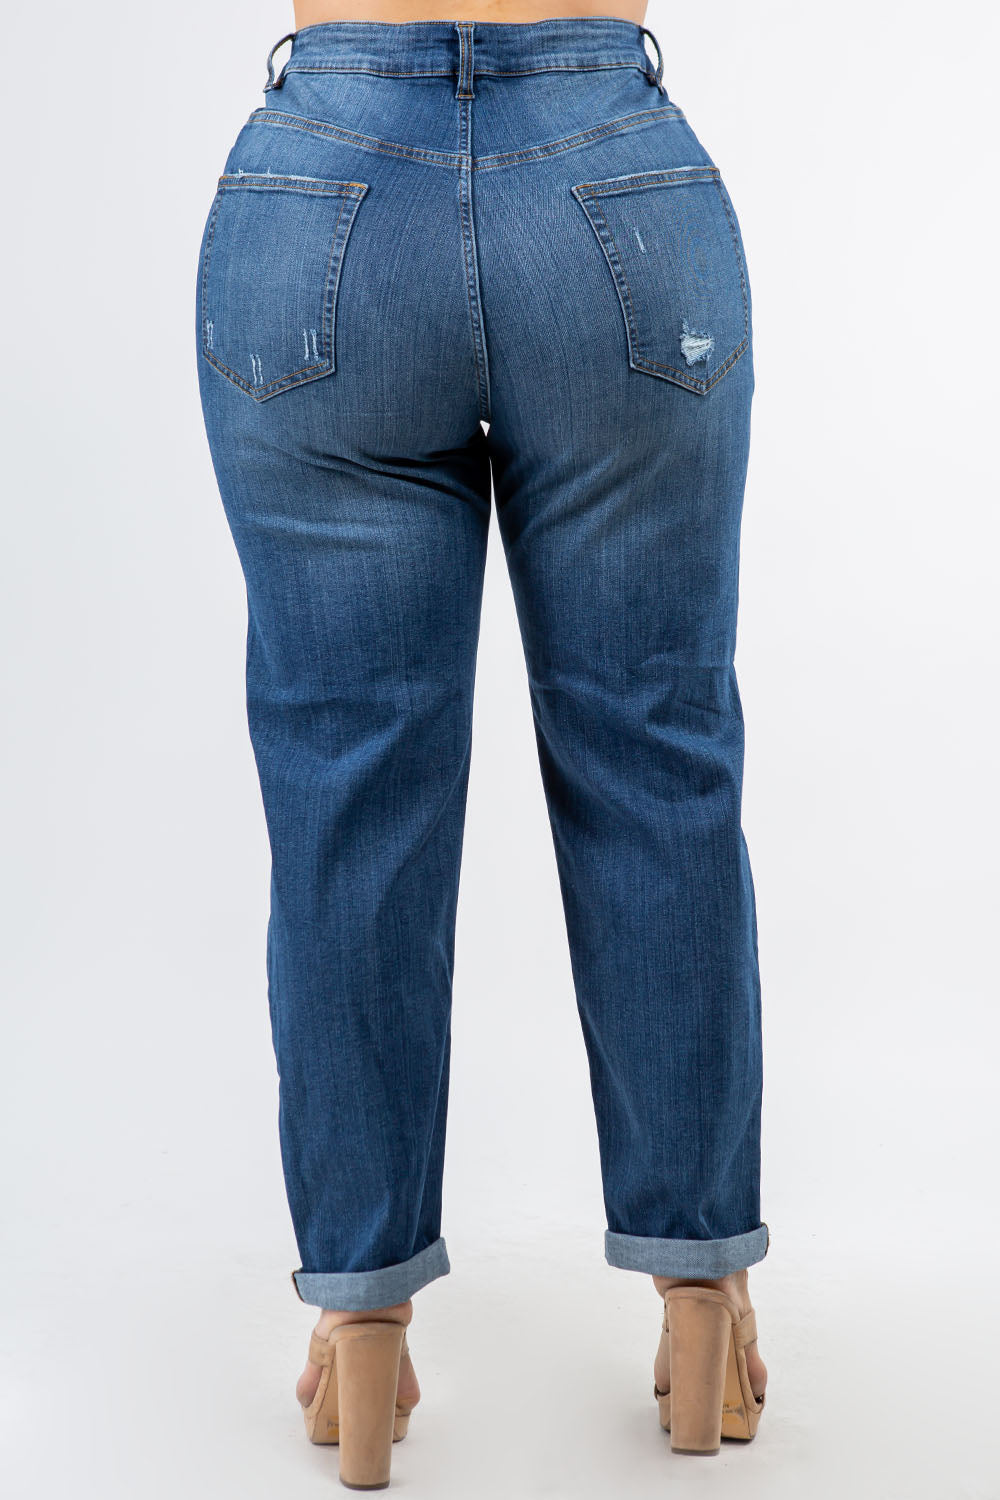 High Rise Distressed Boyfriend Jeans - Plus Size